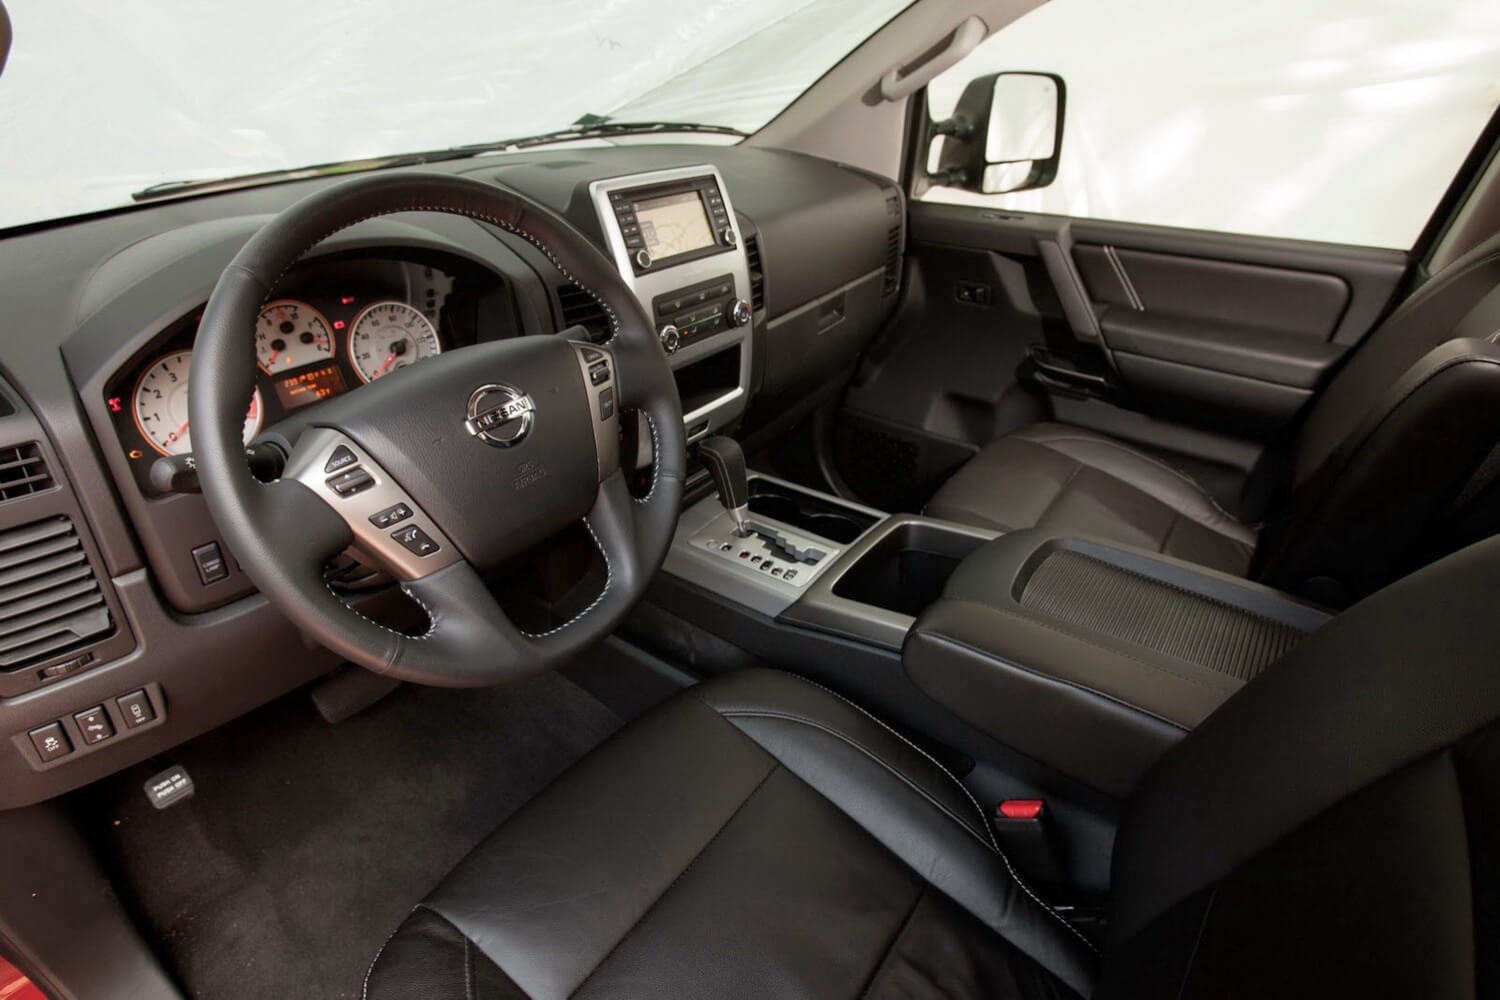 2013 Nissan Titan interior detail